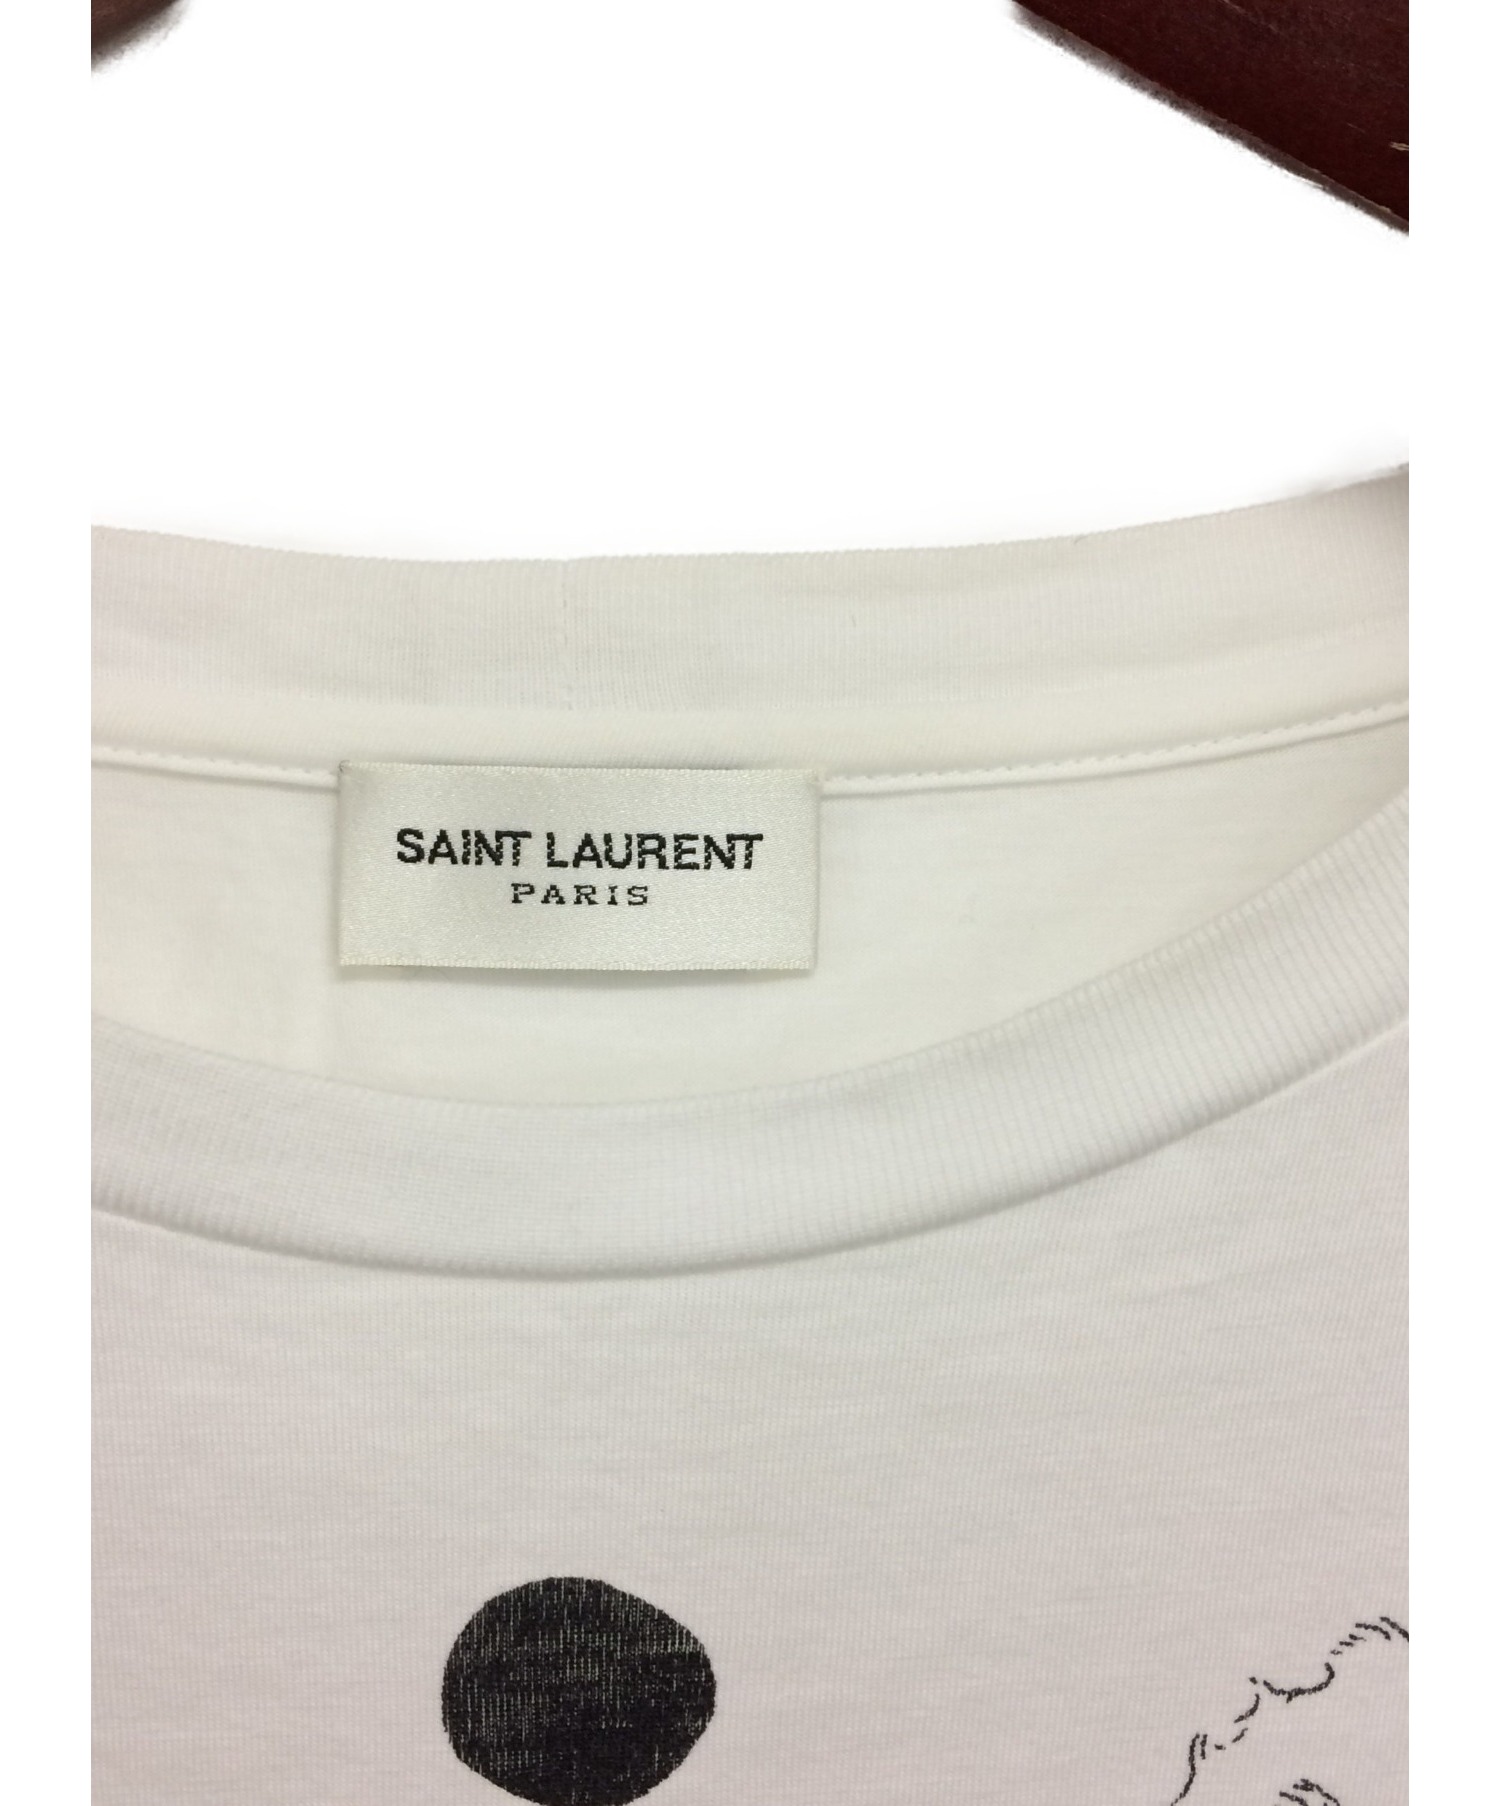 Saint Laurent Paris (サンローランパリ) Grimes Love T-shirt ホワイト サイズ:L